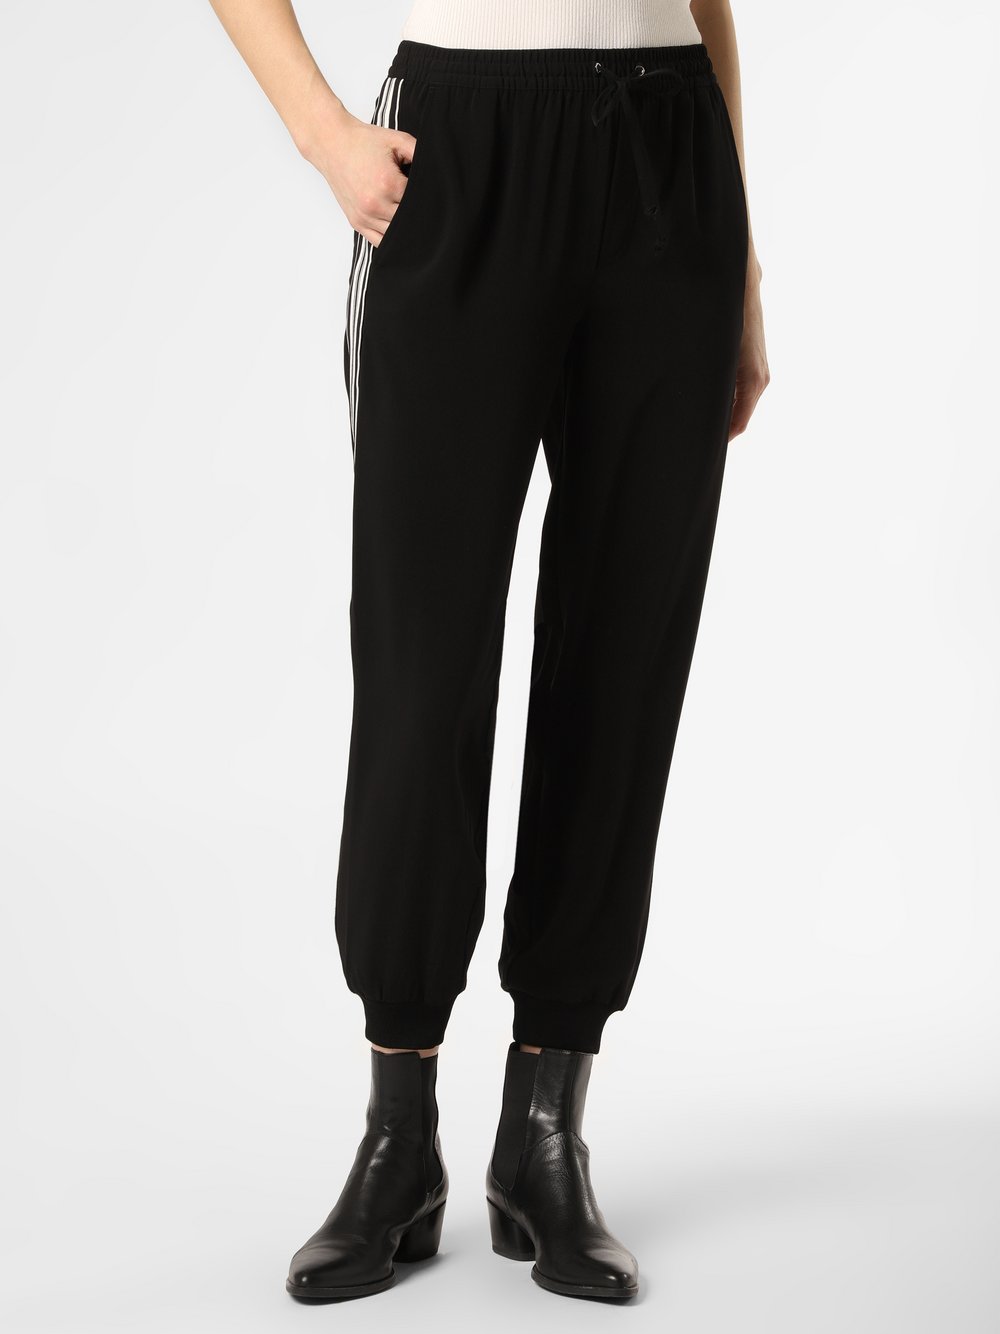 Lauren Ralph Lauren - Damskie spodnie dresowe, czarny